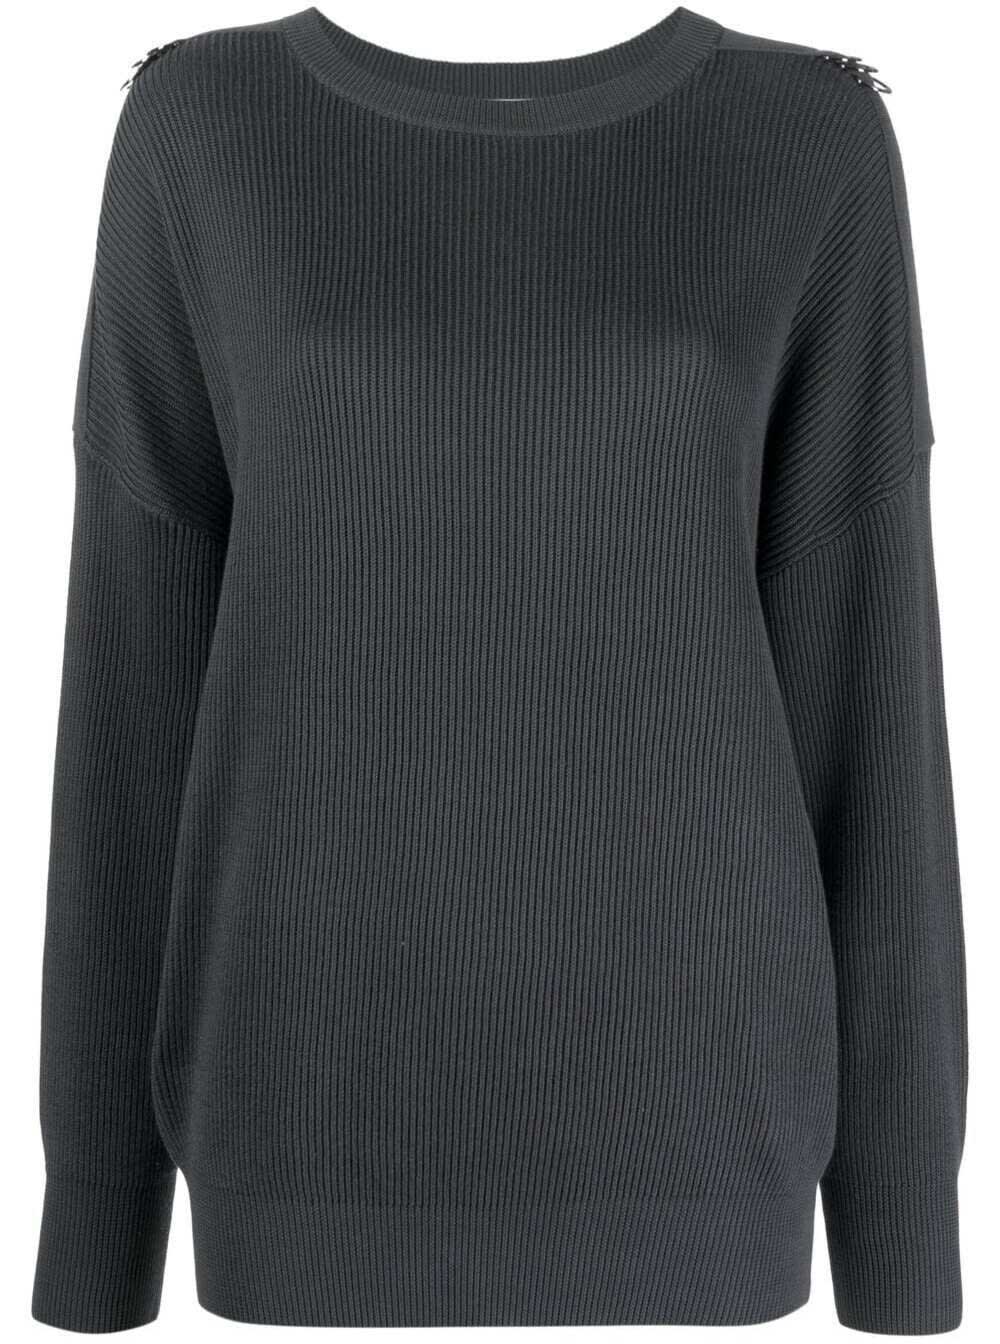 Brunello Cucinelli Grey Cotton Ribbed Sweater